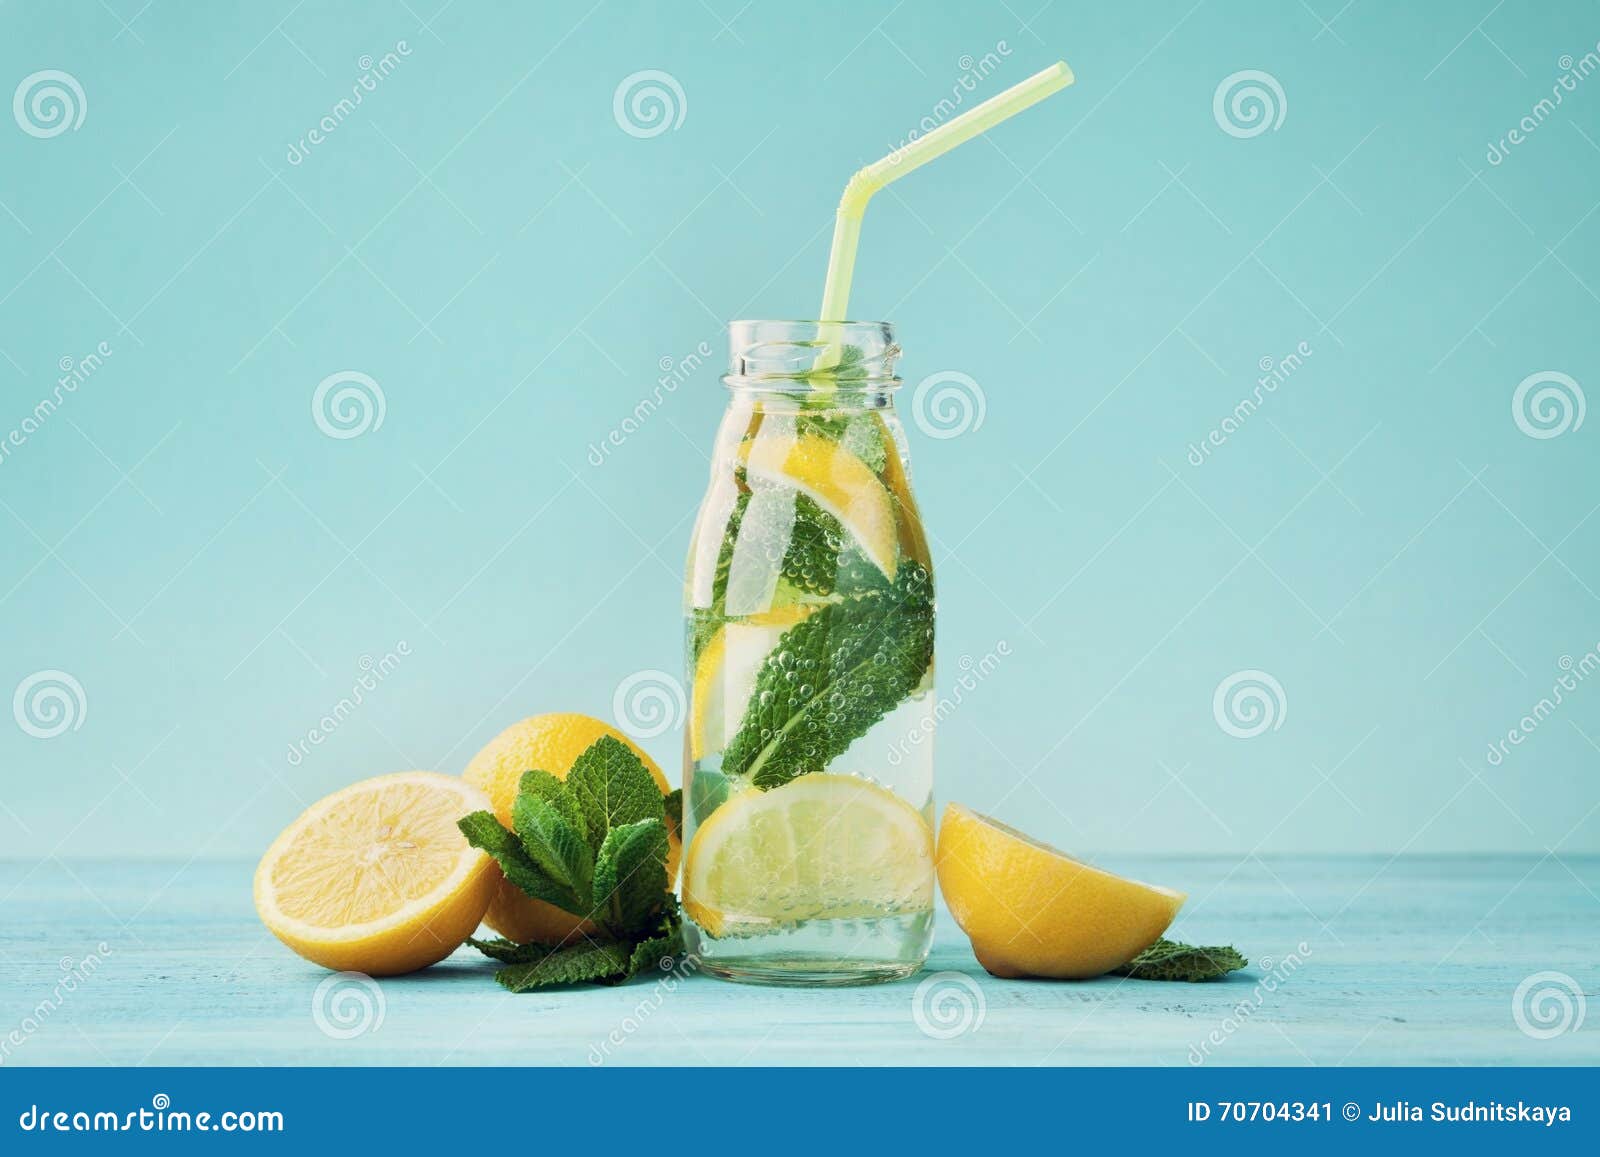 lemonade drink of soda water, lemon and mint in jar on turquoise background